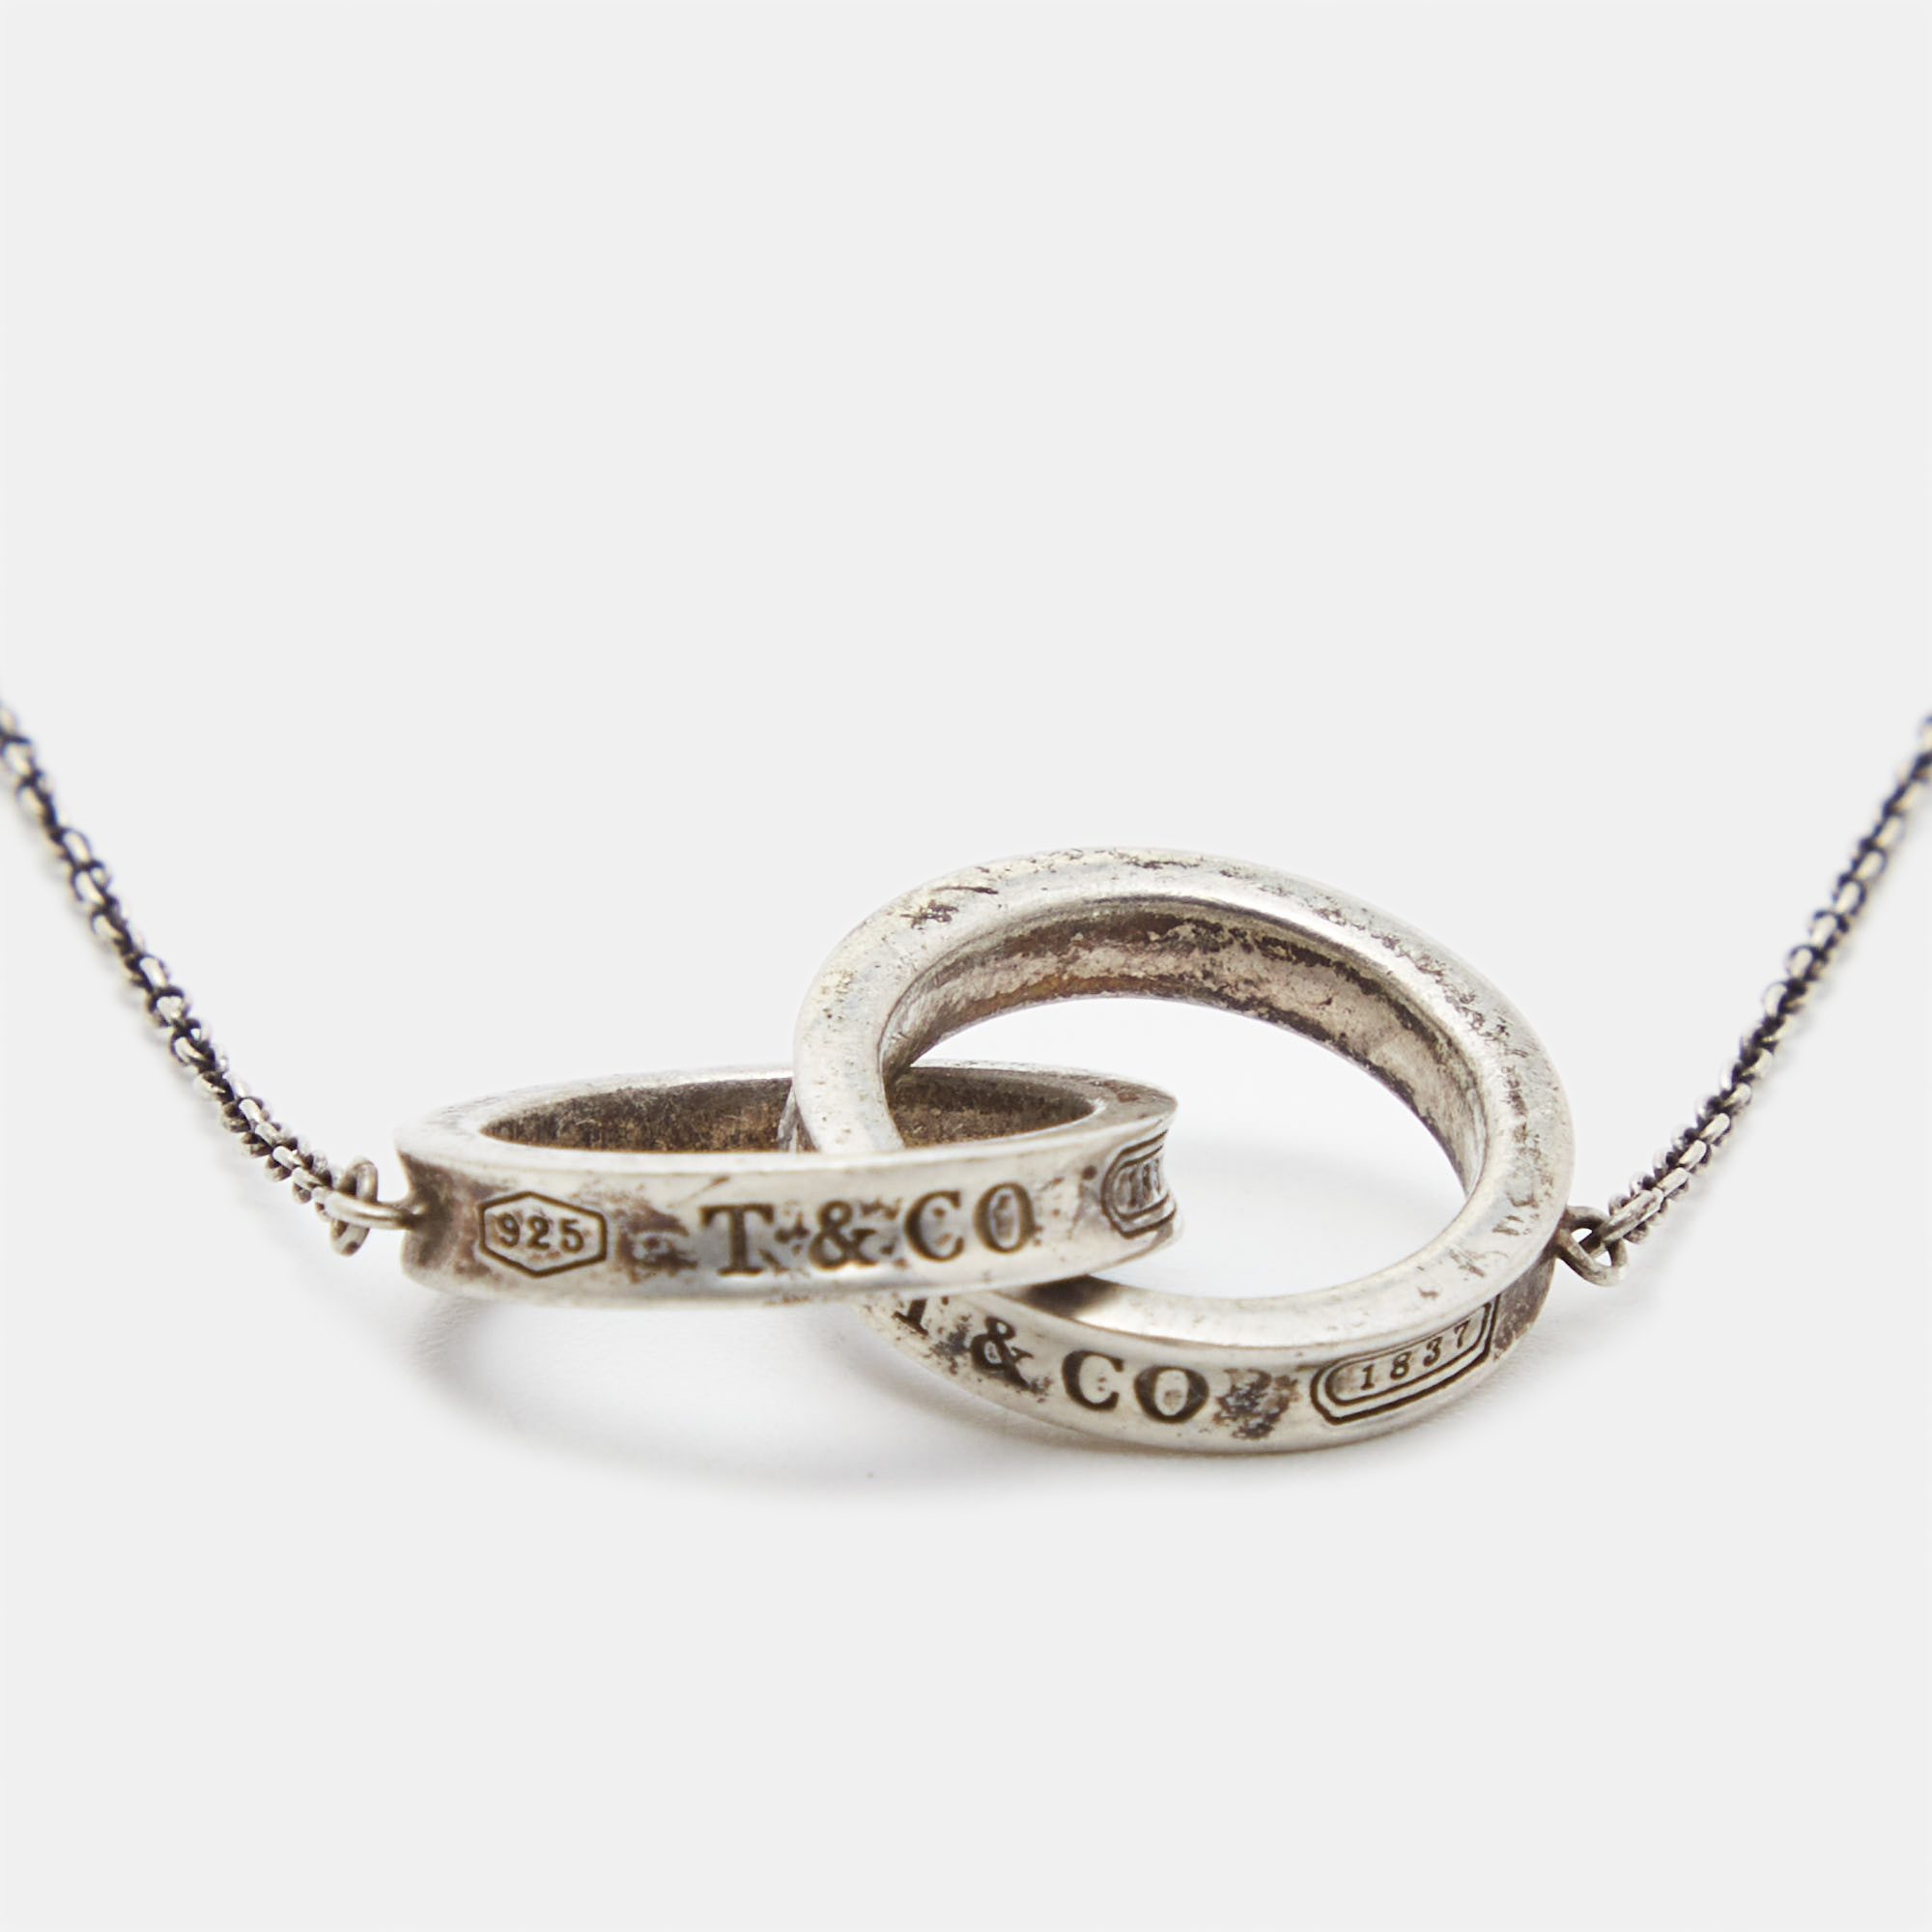 Tiffany & Co. Tiffany 1837 Interlocking Circles Sterling Silver Necklace